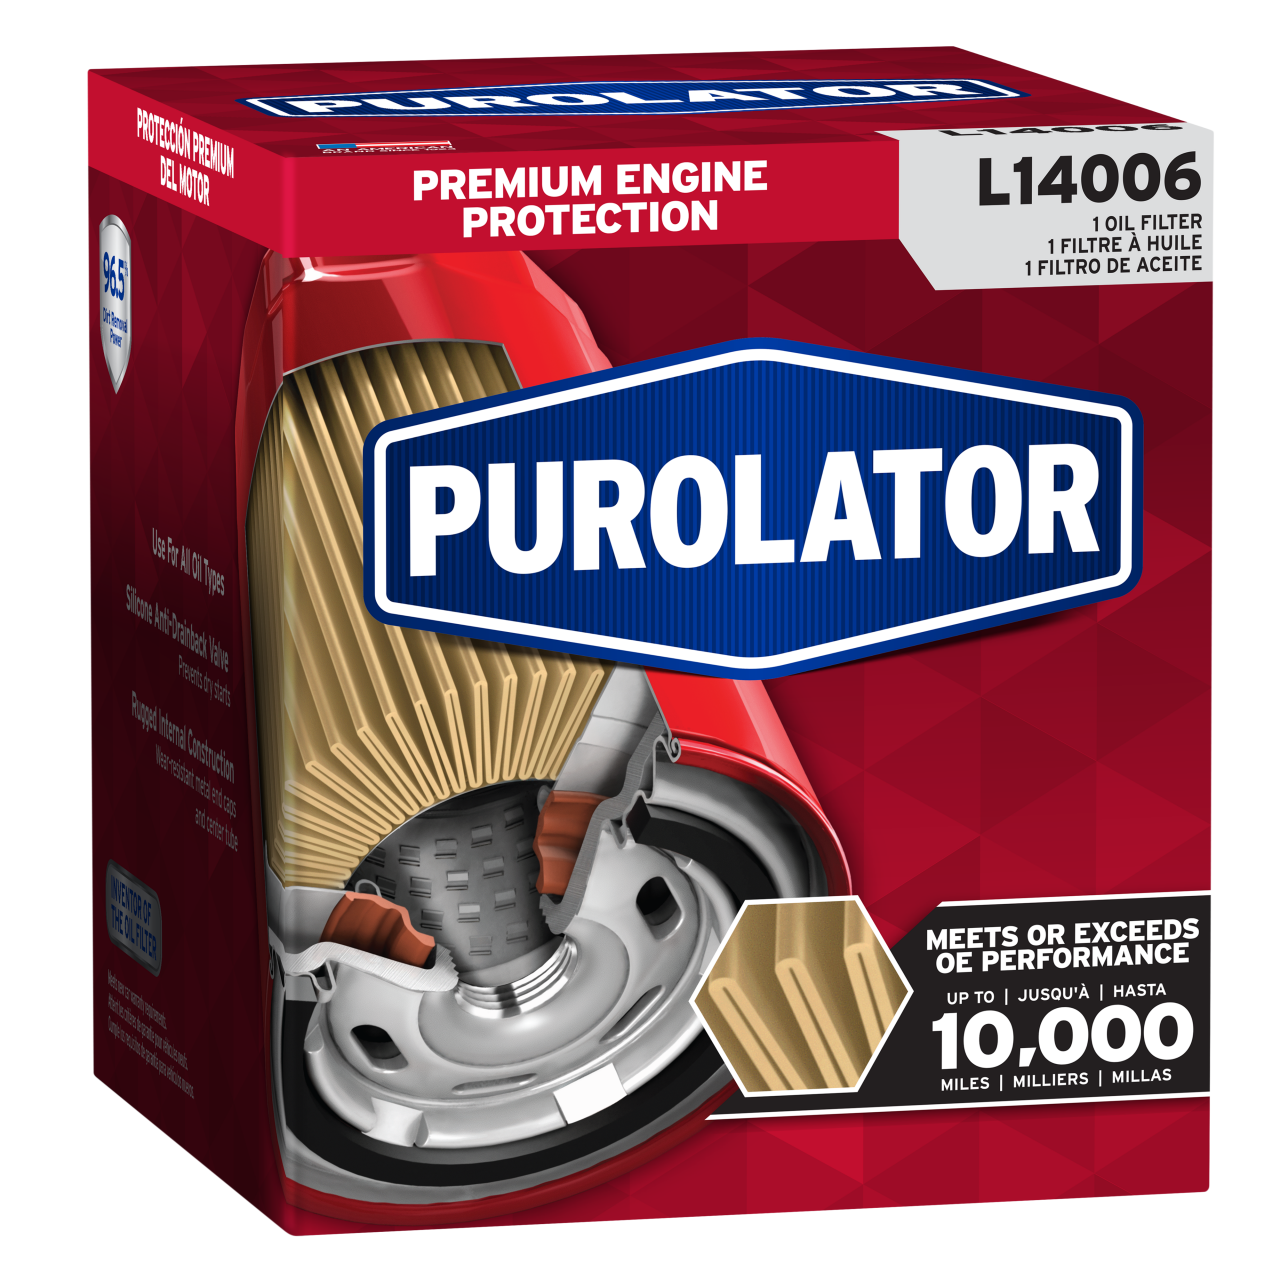 https://www.purolatornow.com/content/dam/website/purolator/product-pages/purolator-oil/PUROLATOR_Box_4000x4000.png.transform/w.1280/image.png